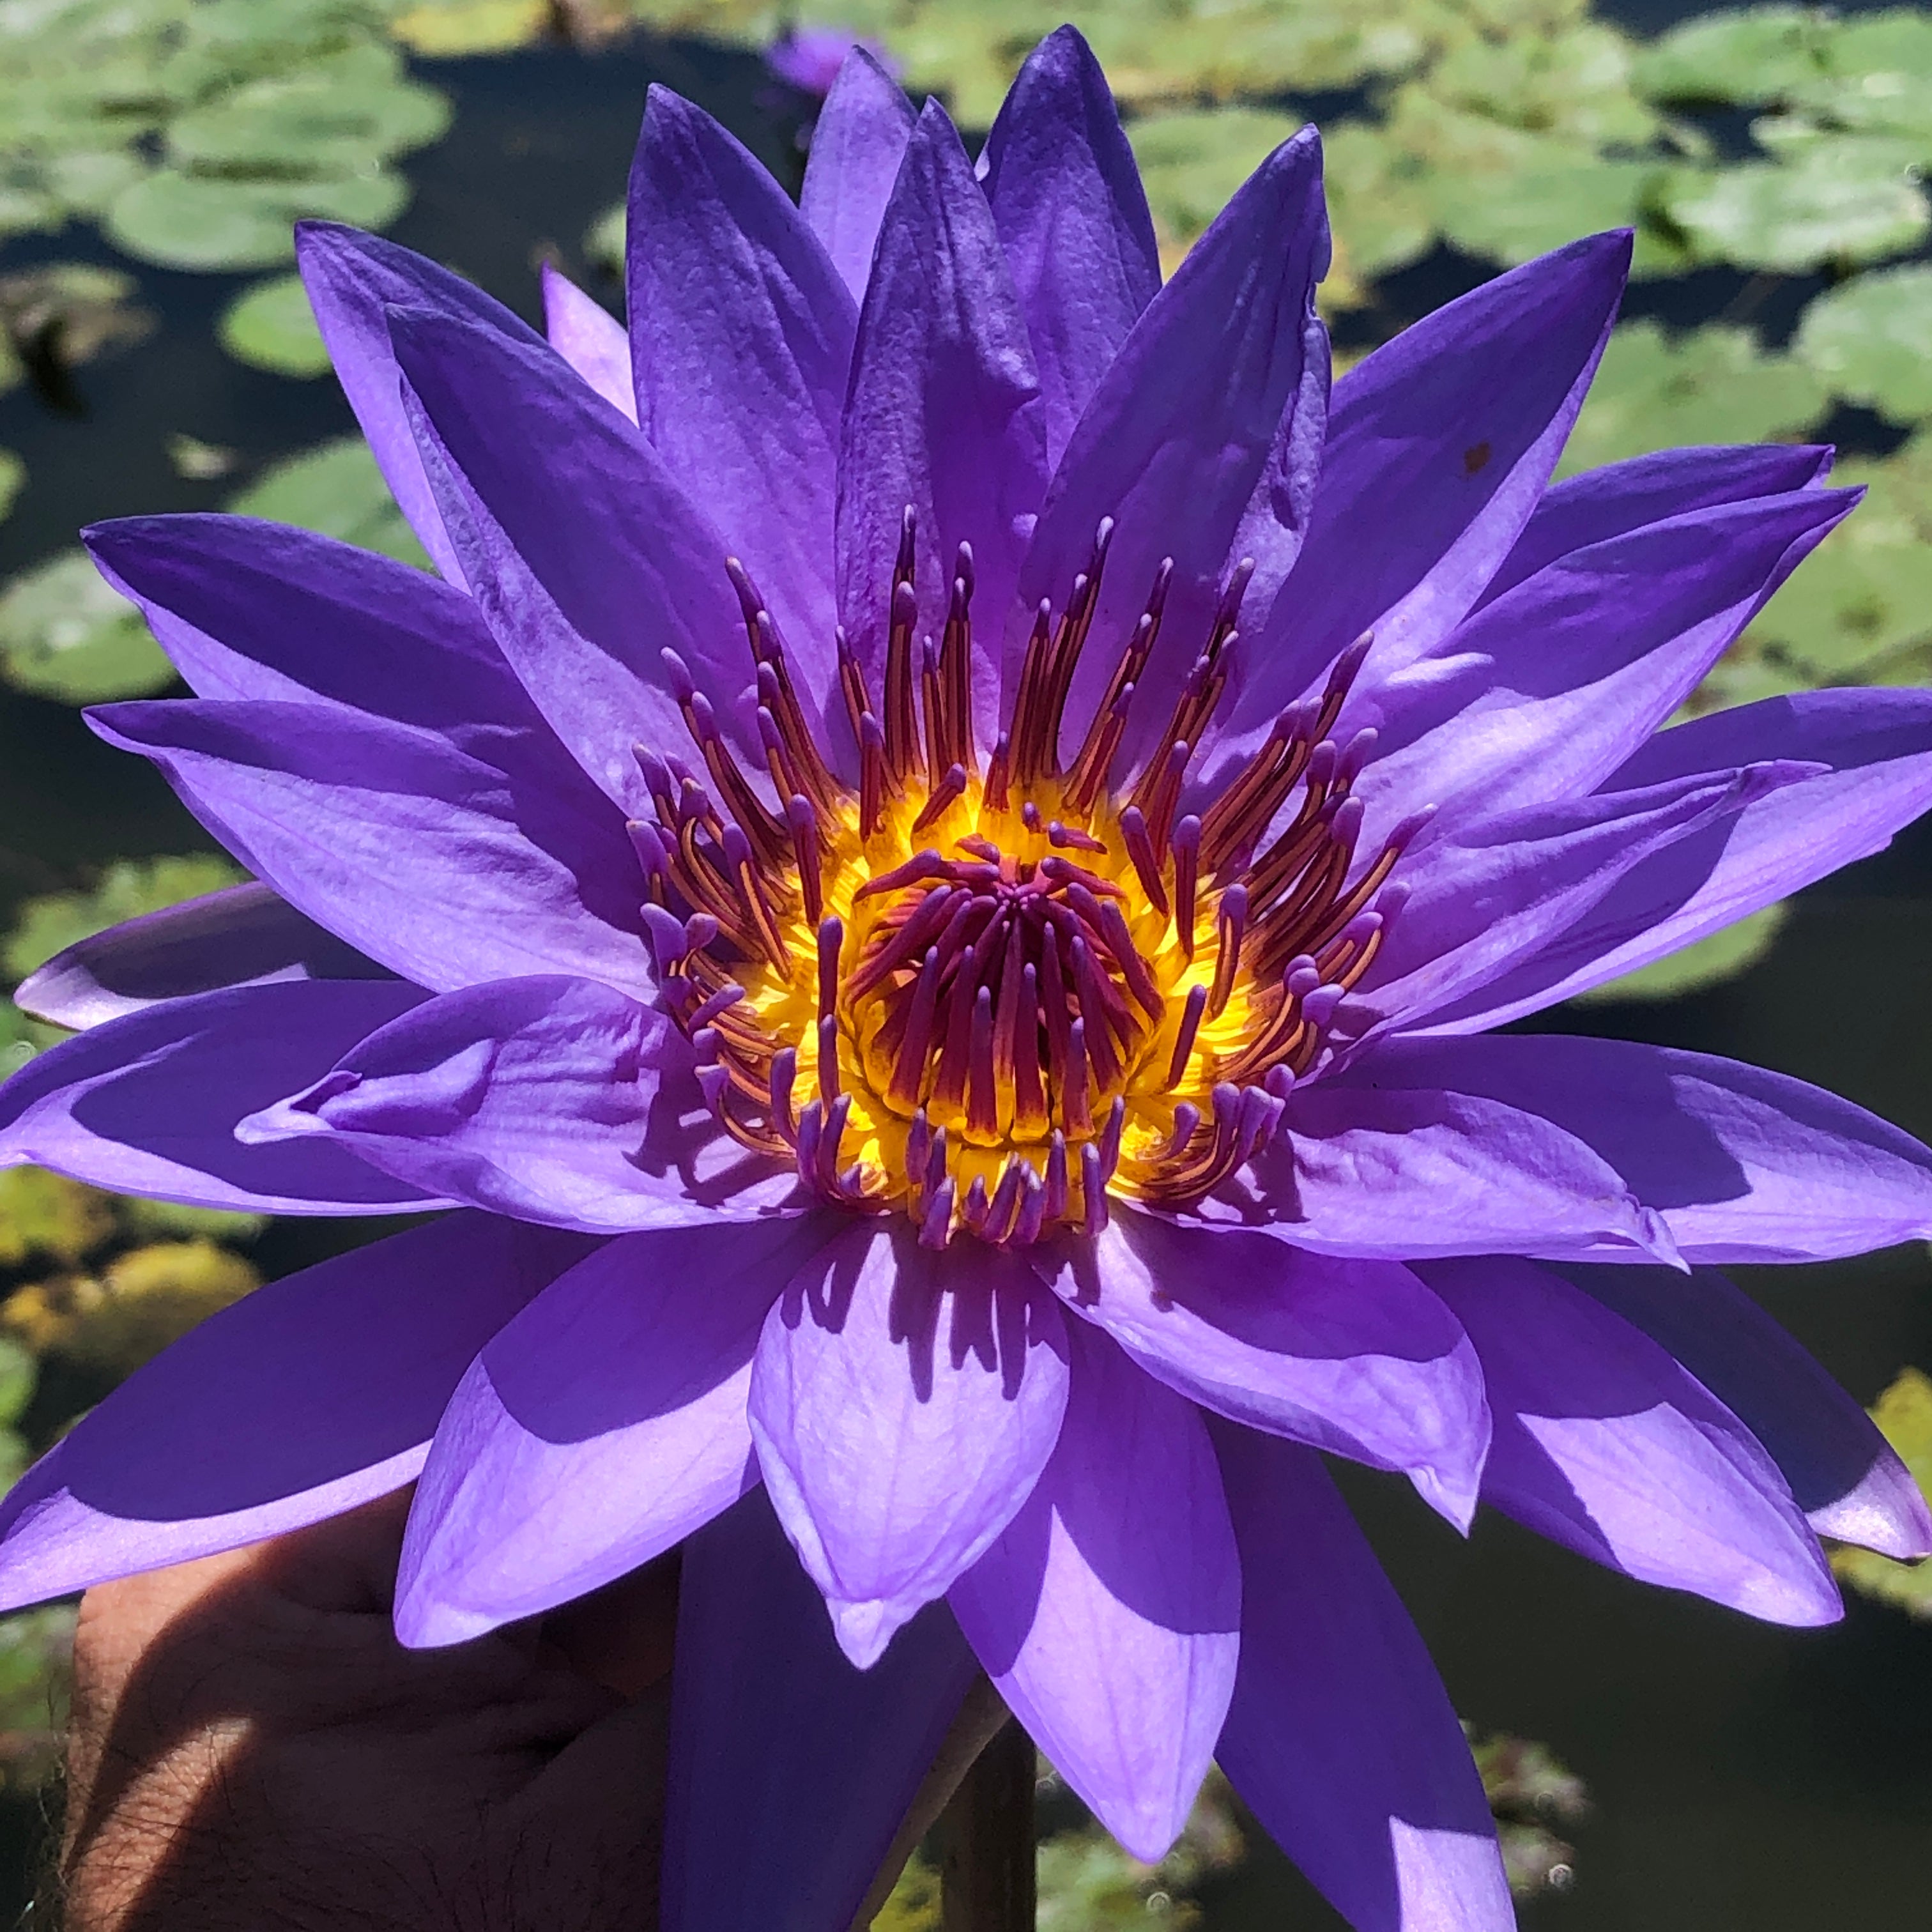 blue and purple lotus flower